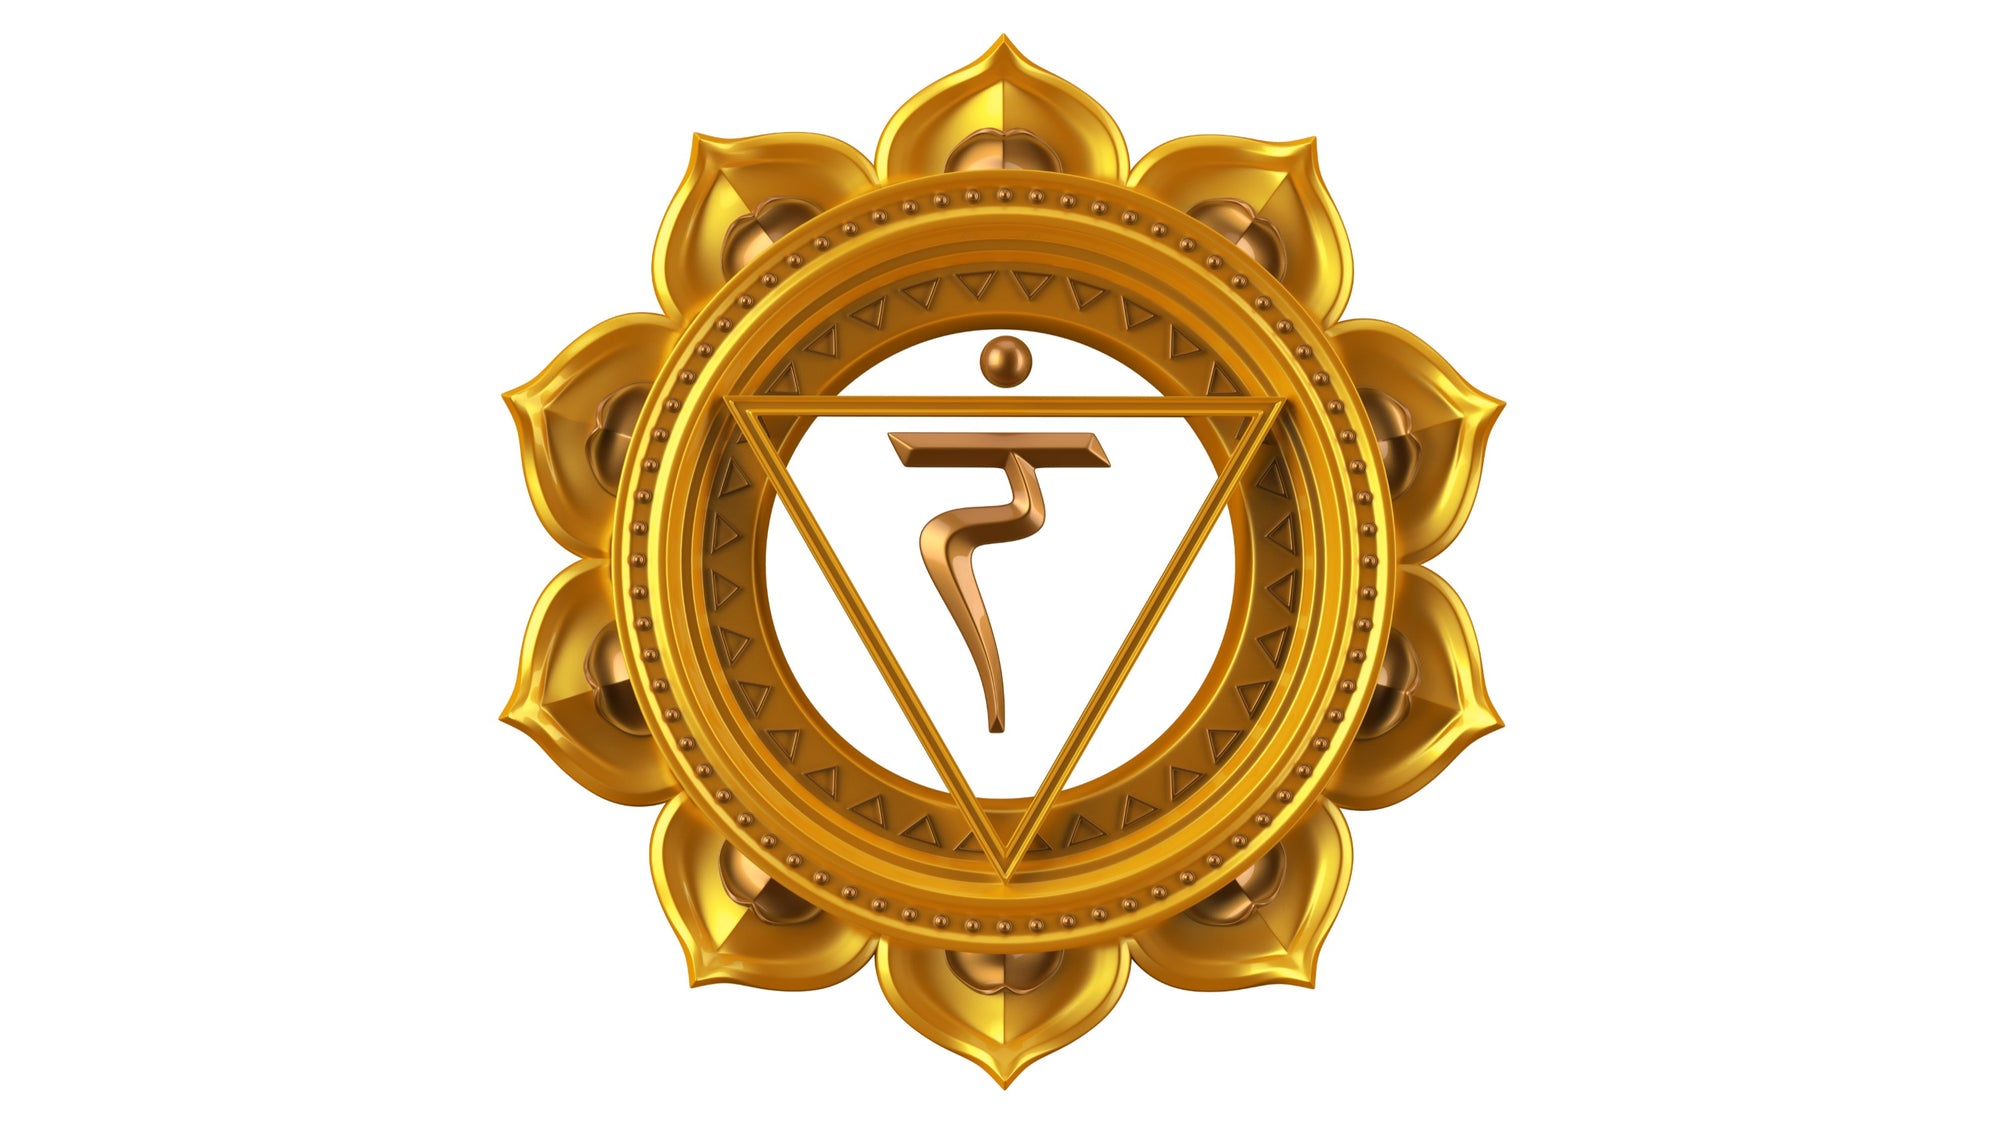 Image of the Manipura Chakra symbol